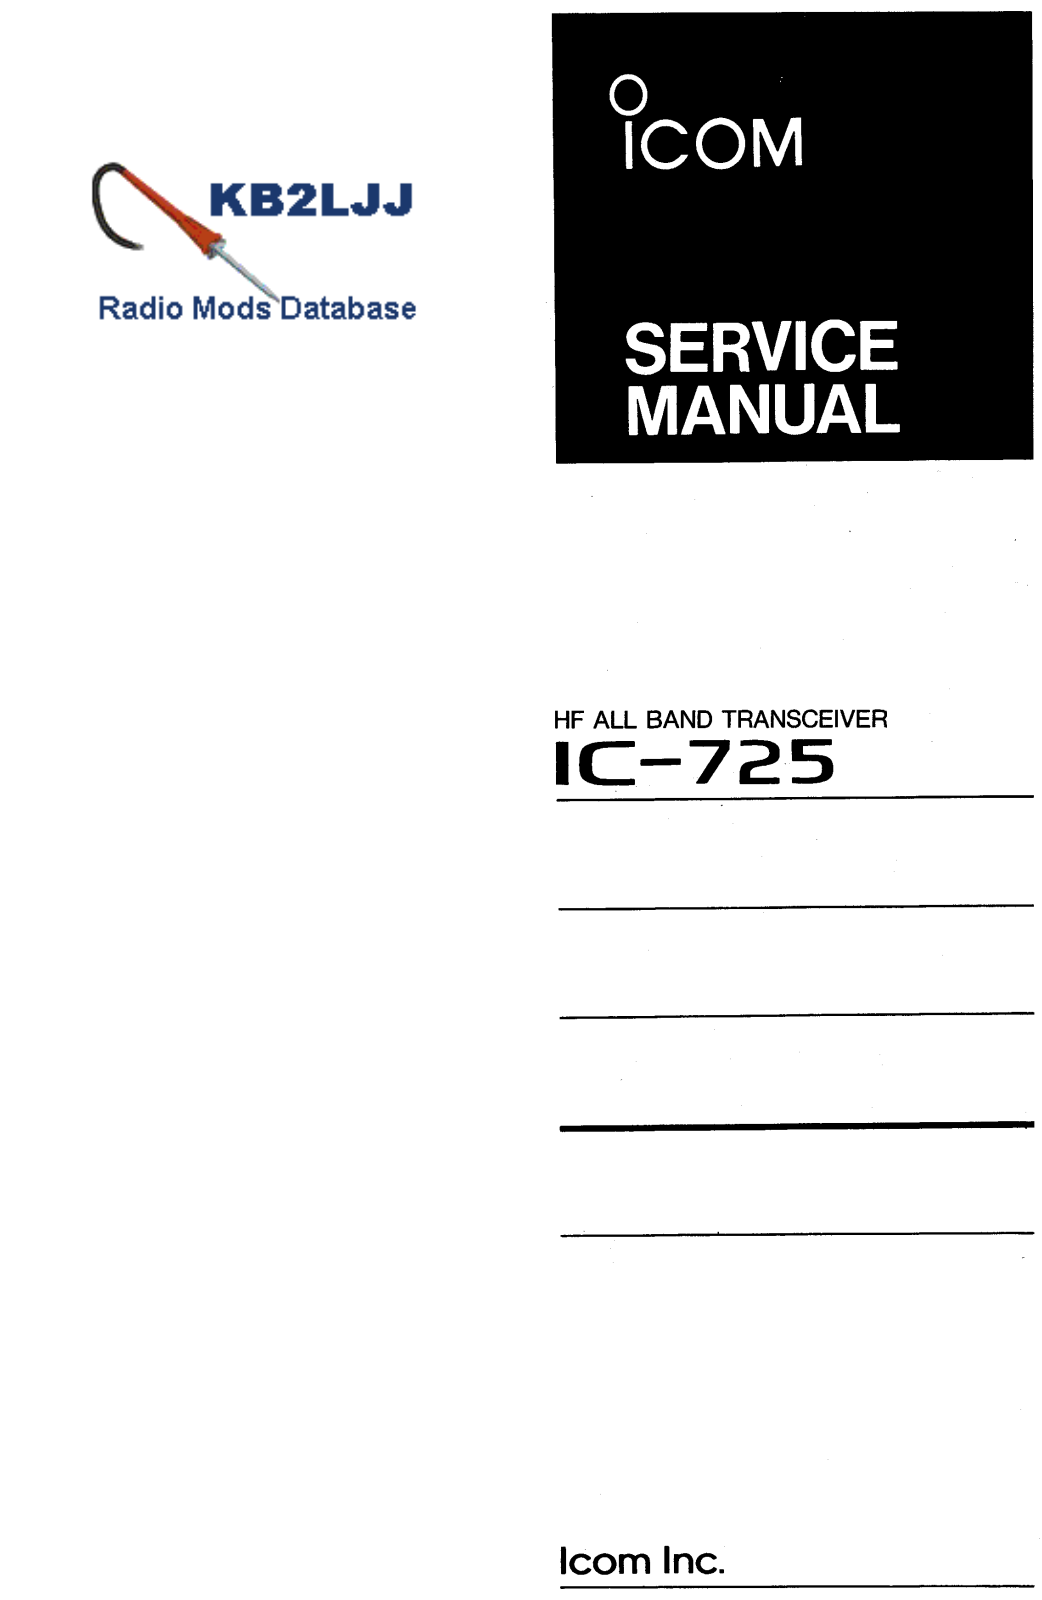 ICOM IC-725 Service Manual